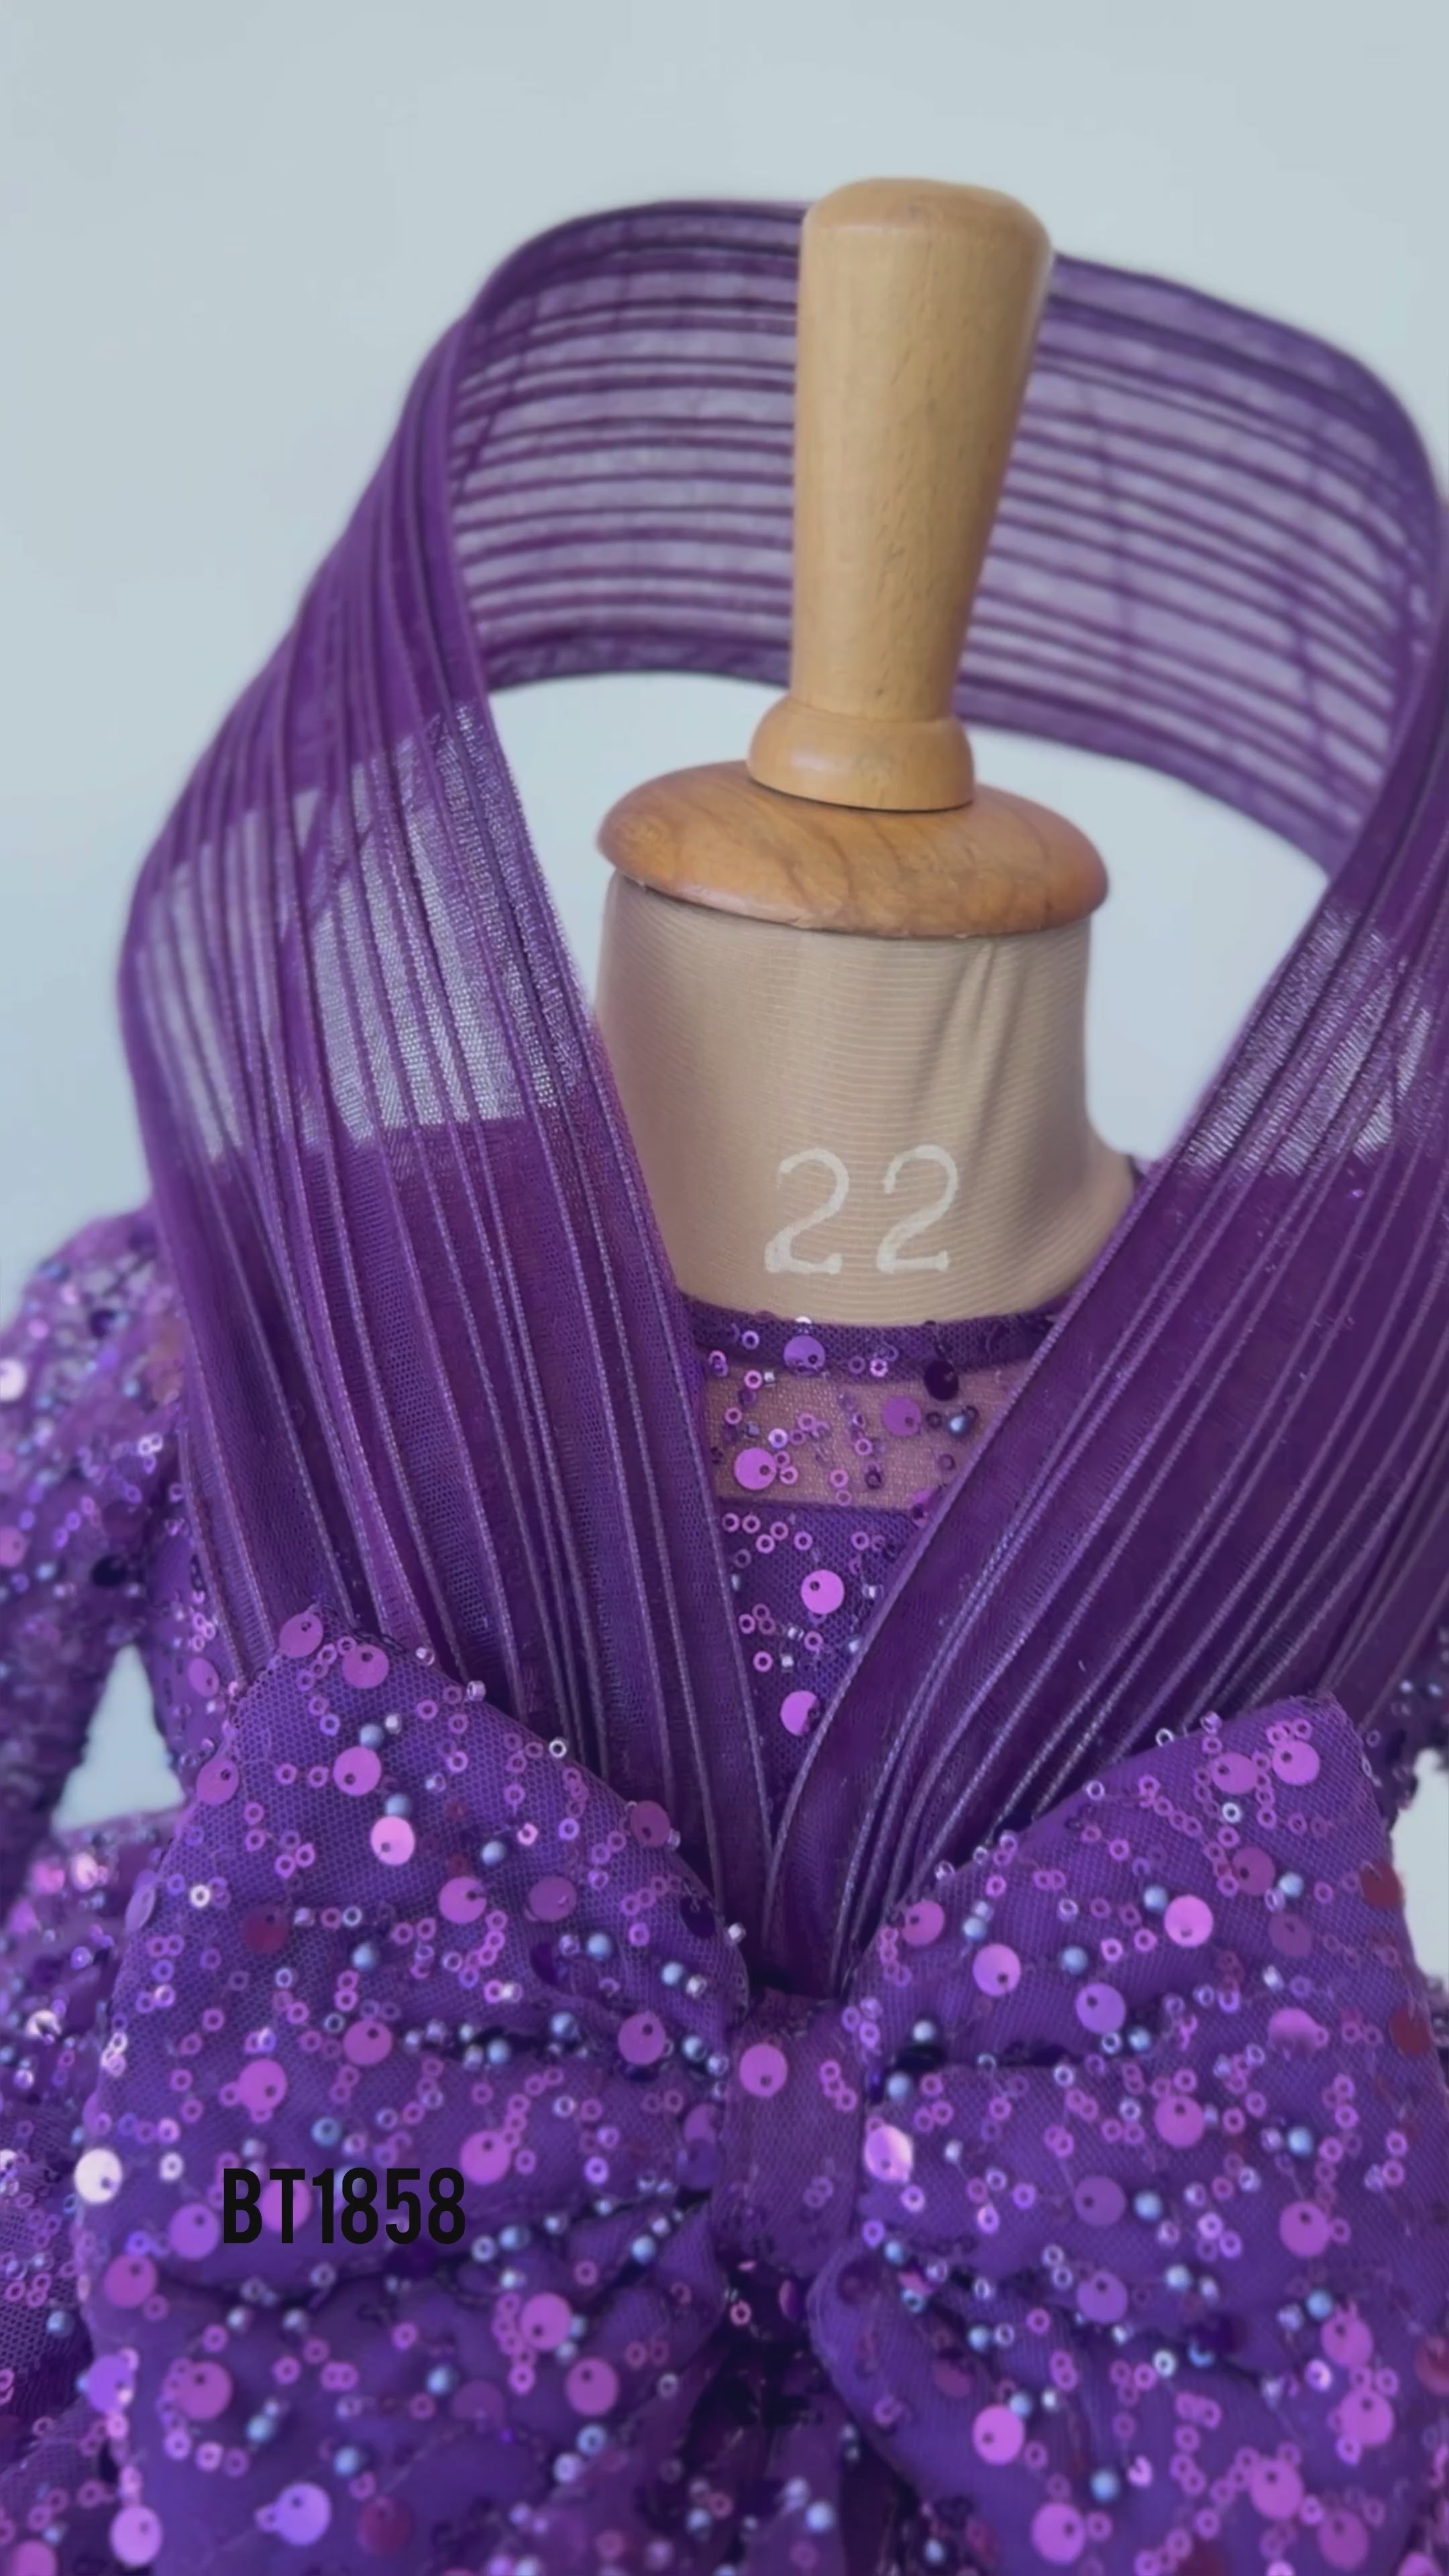 BT1858 Regal Purple Sequin Delight - Baby Party Dress